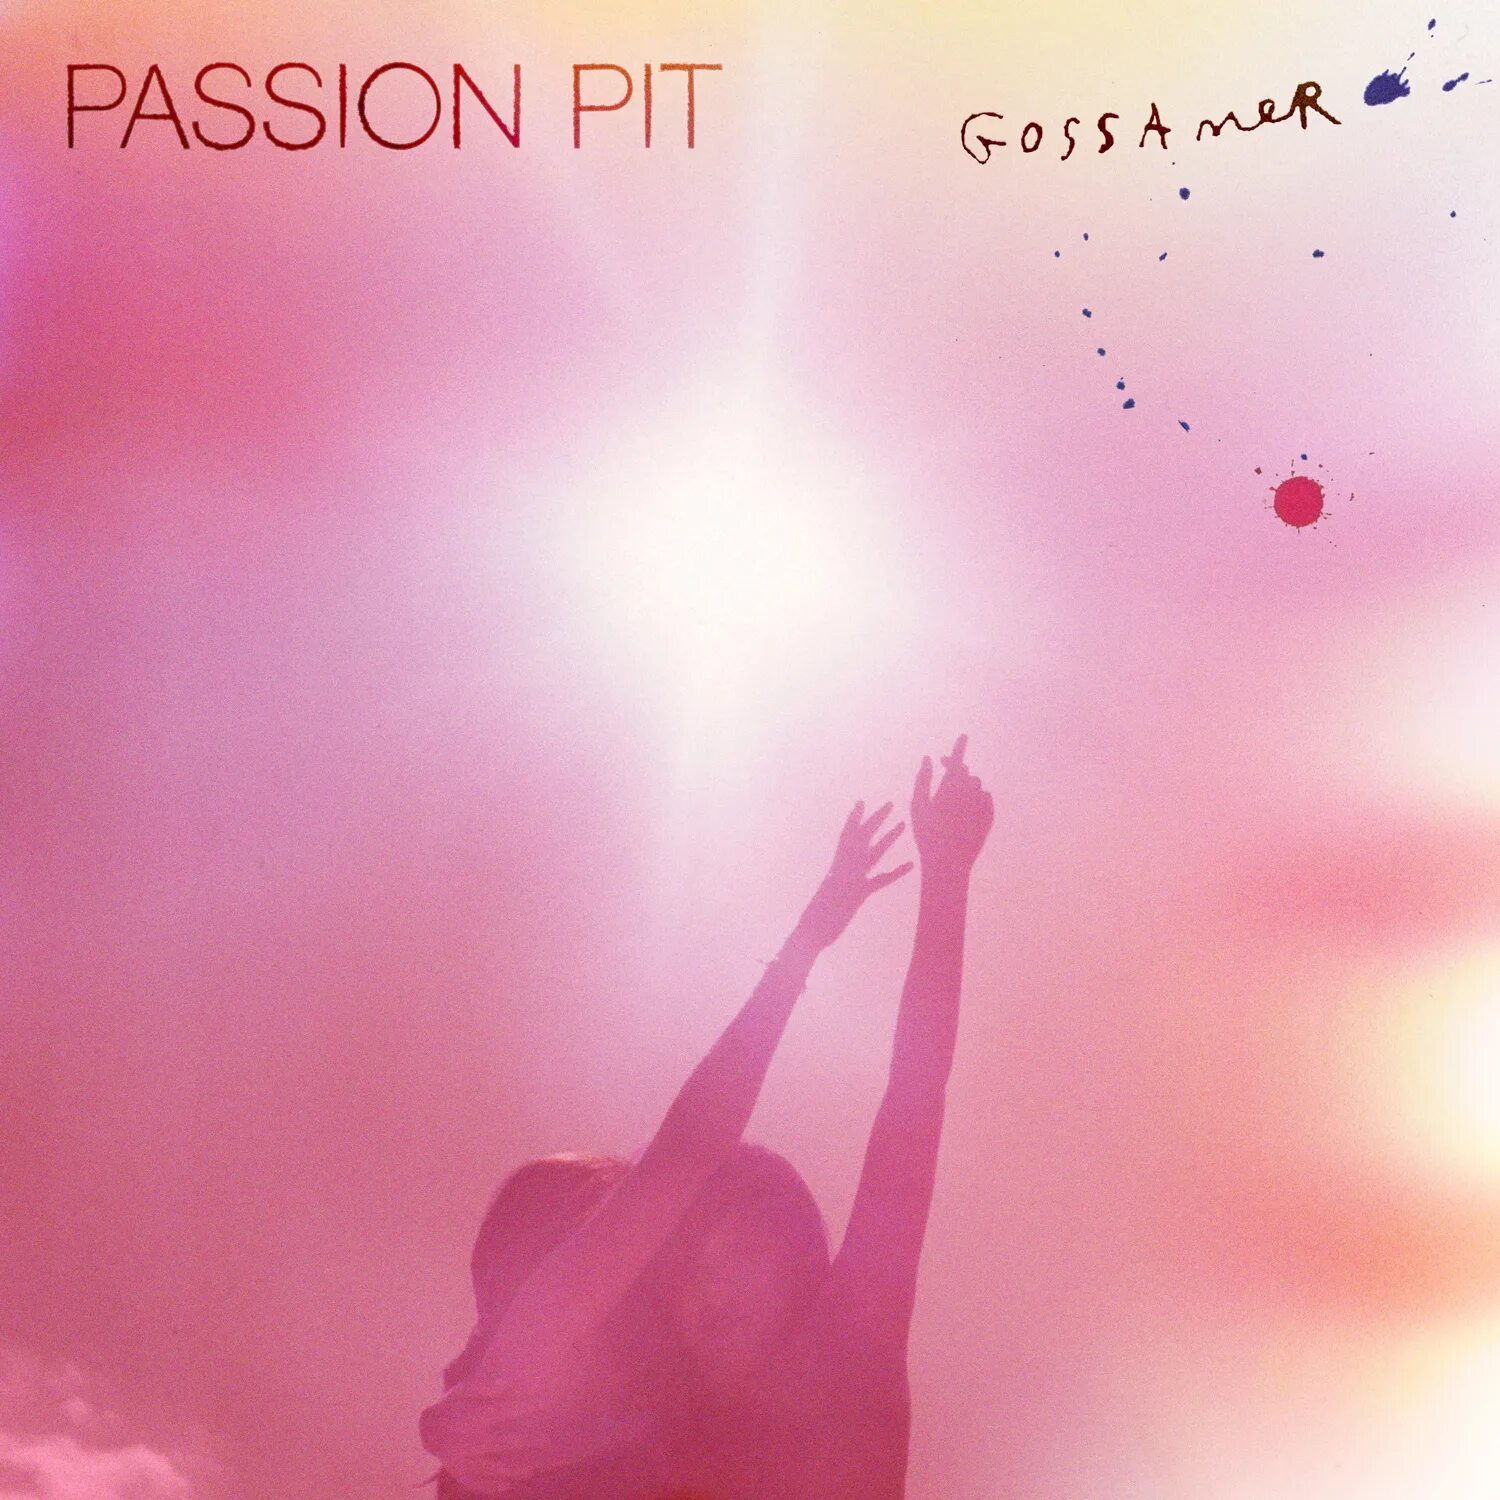 Gossamer melogram. Gossamer певец. Passion Pit "Gossamer (CD)".